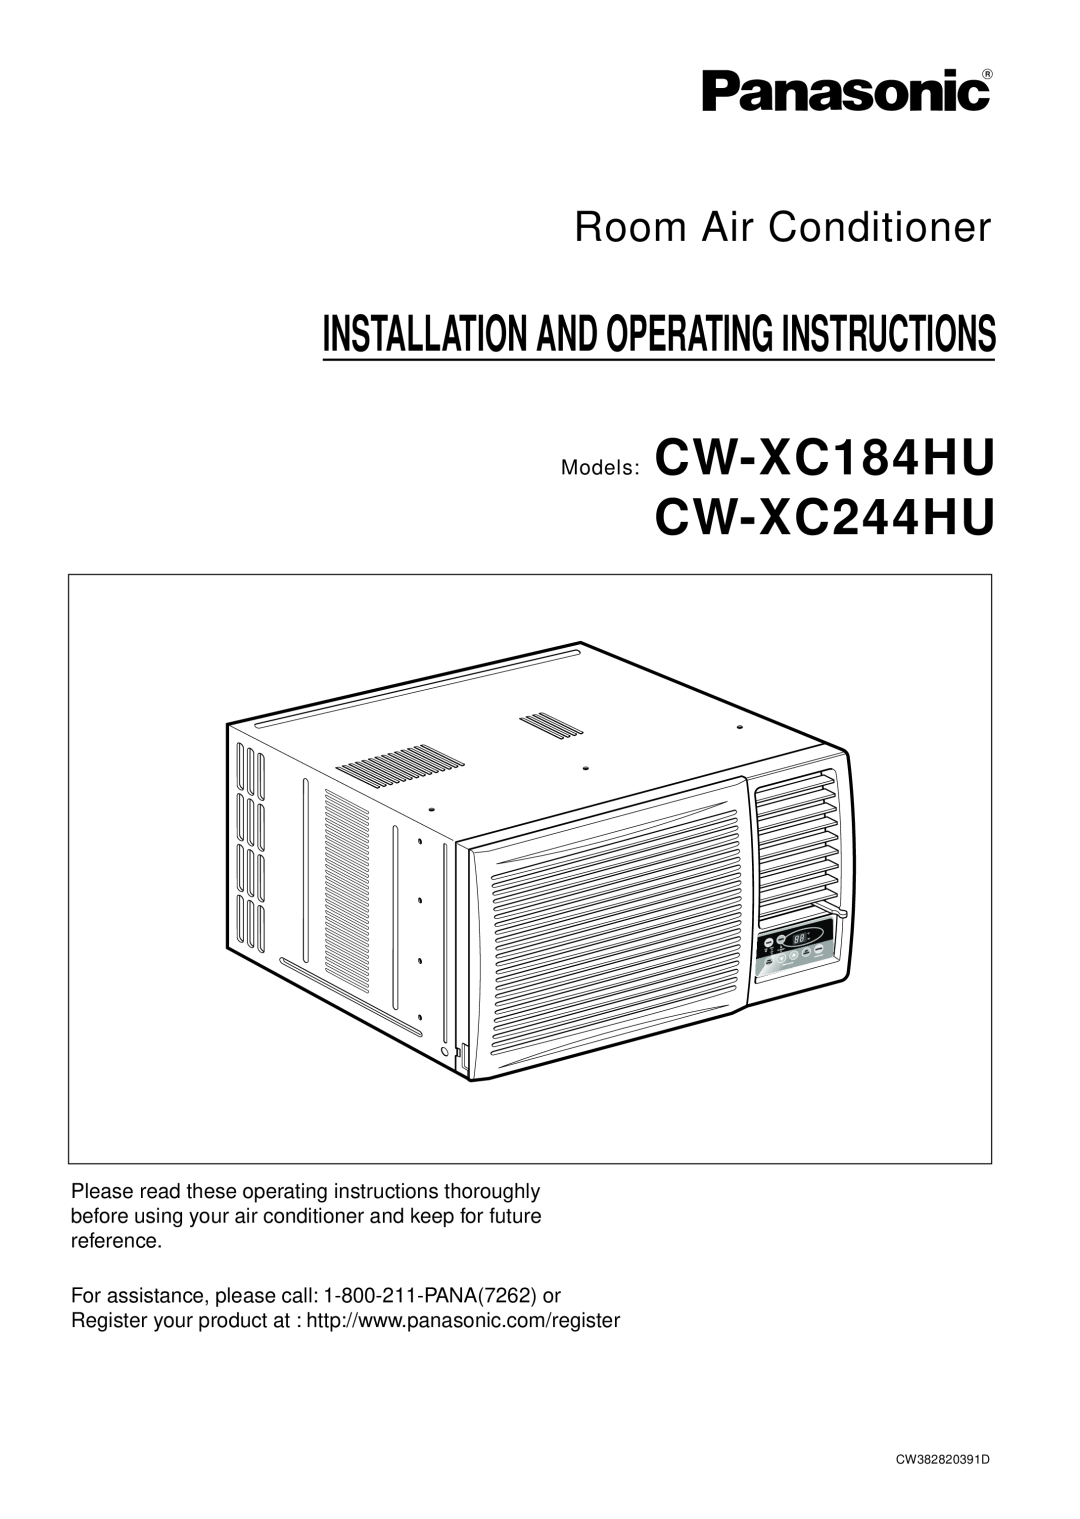 Panasonic manual Models CW-XC184HU CW-XC244HU, Room Air Conditioner, Installation And Operating Instructions 